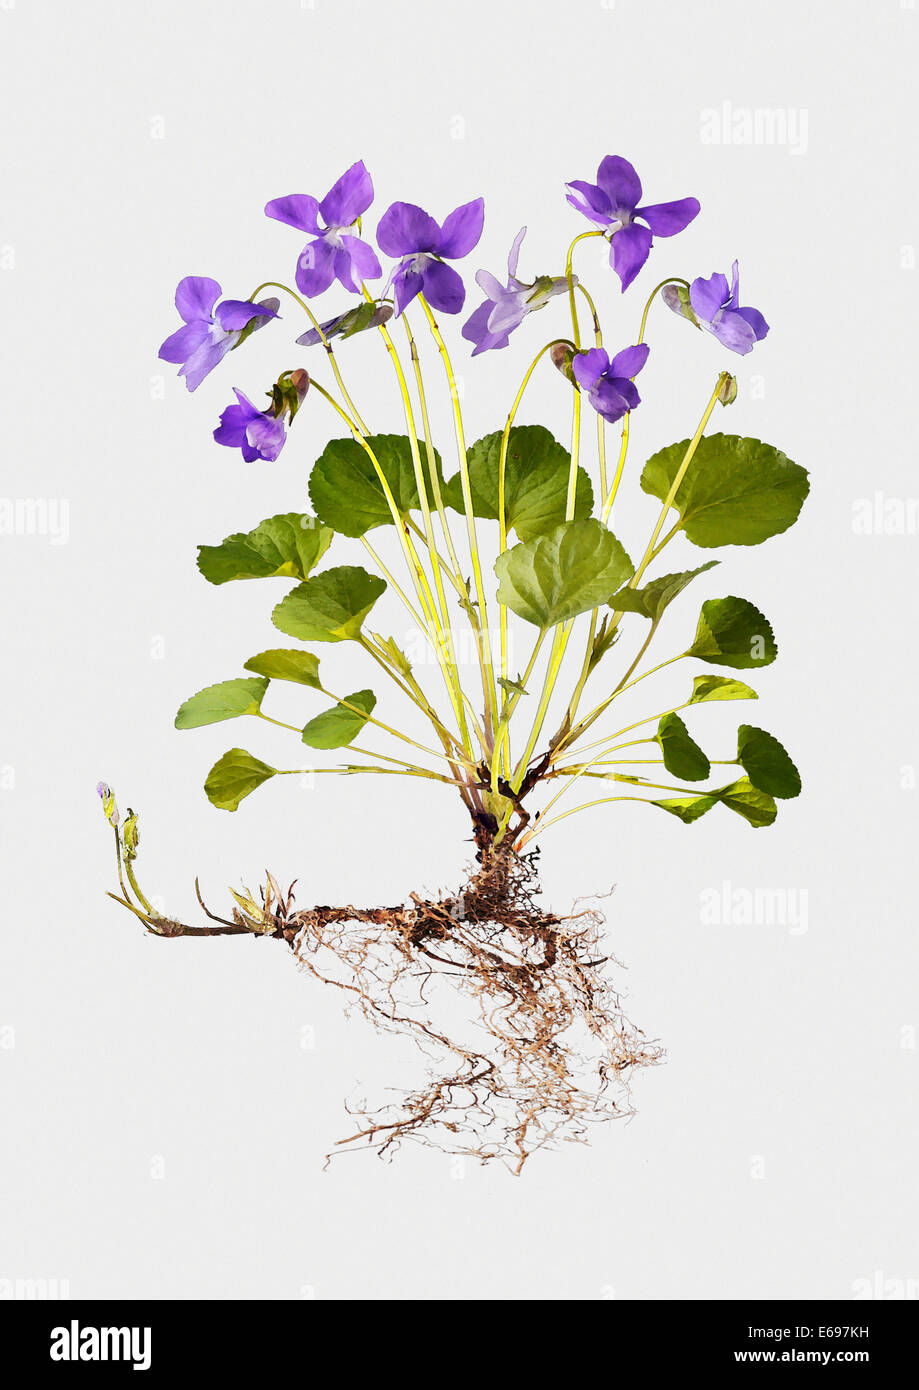 Viola odorata illustration hi-res stock photography and images - Alamy